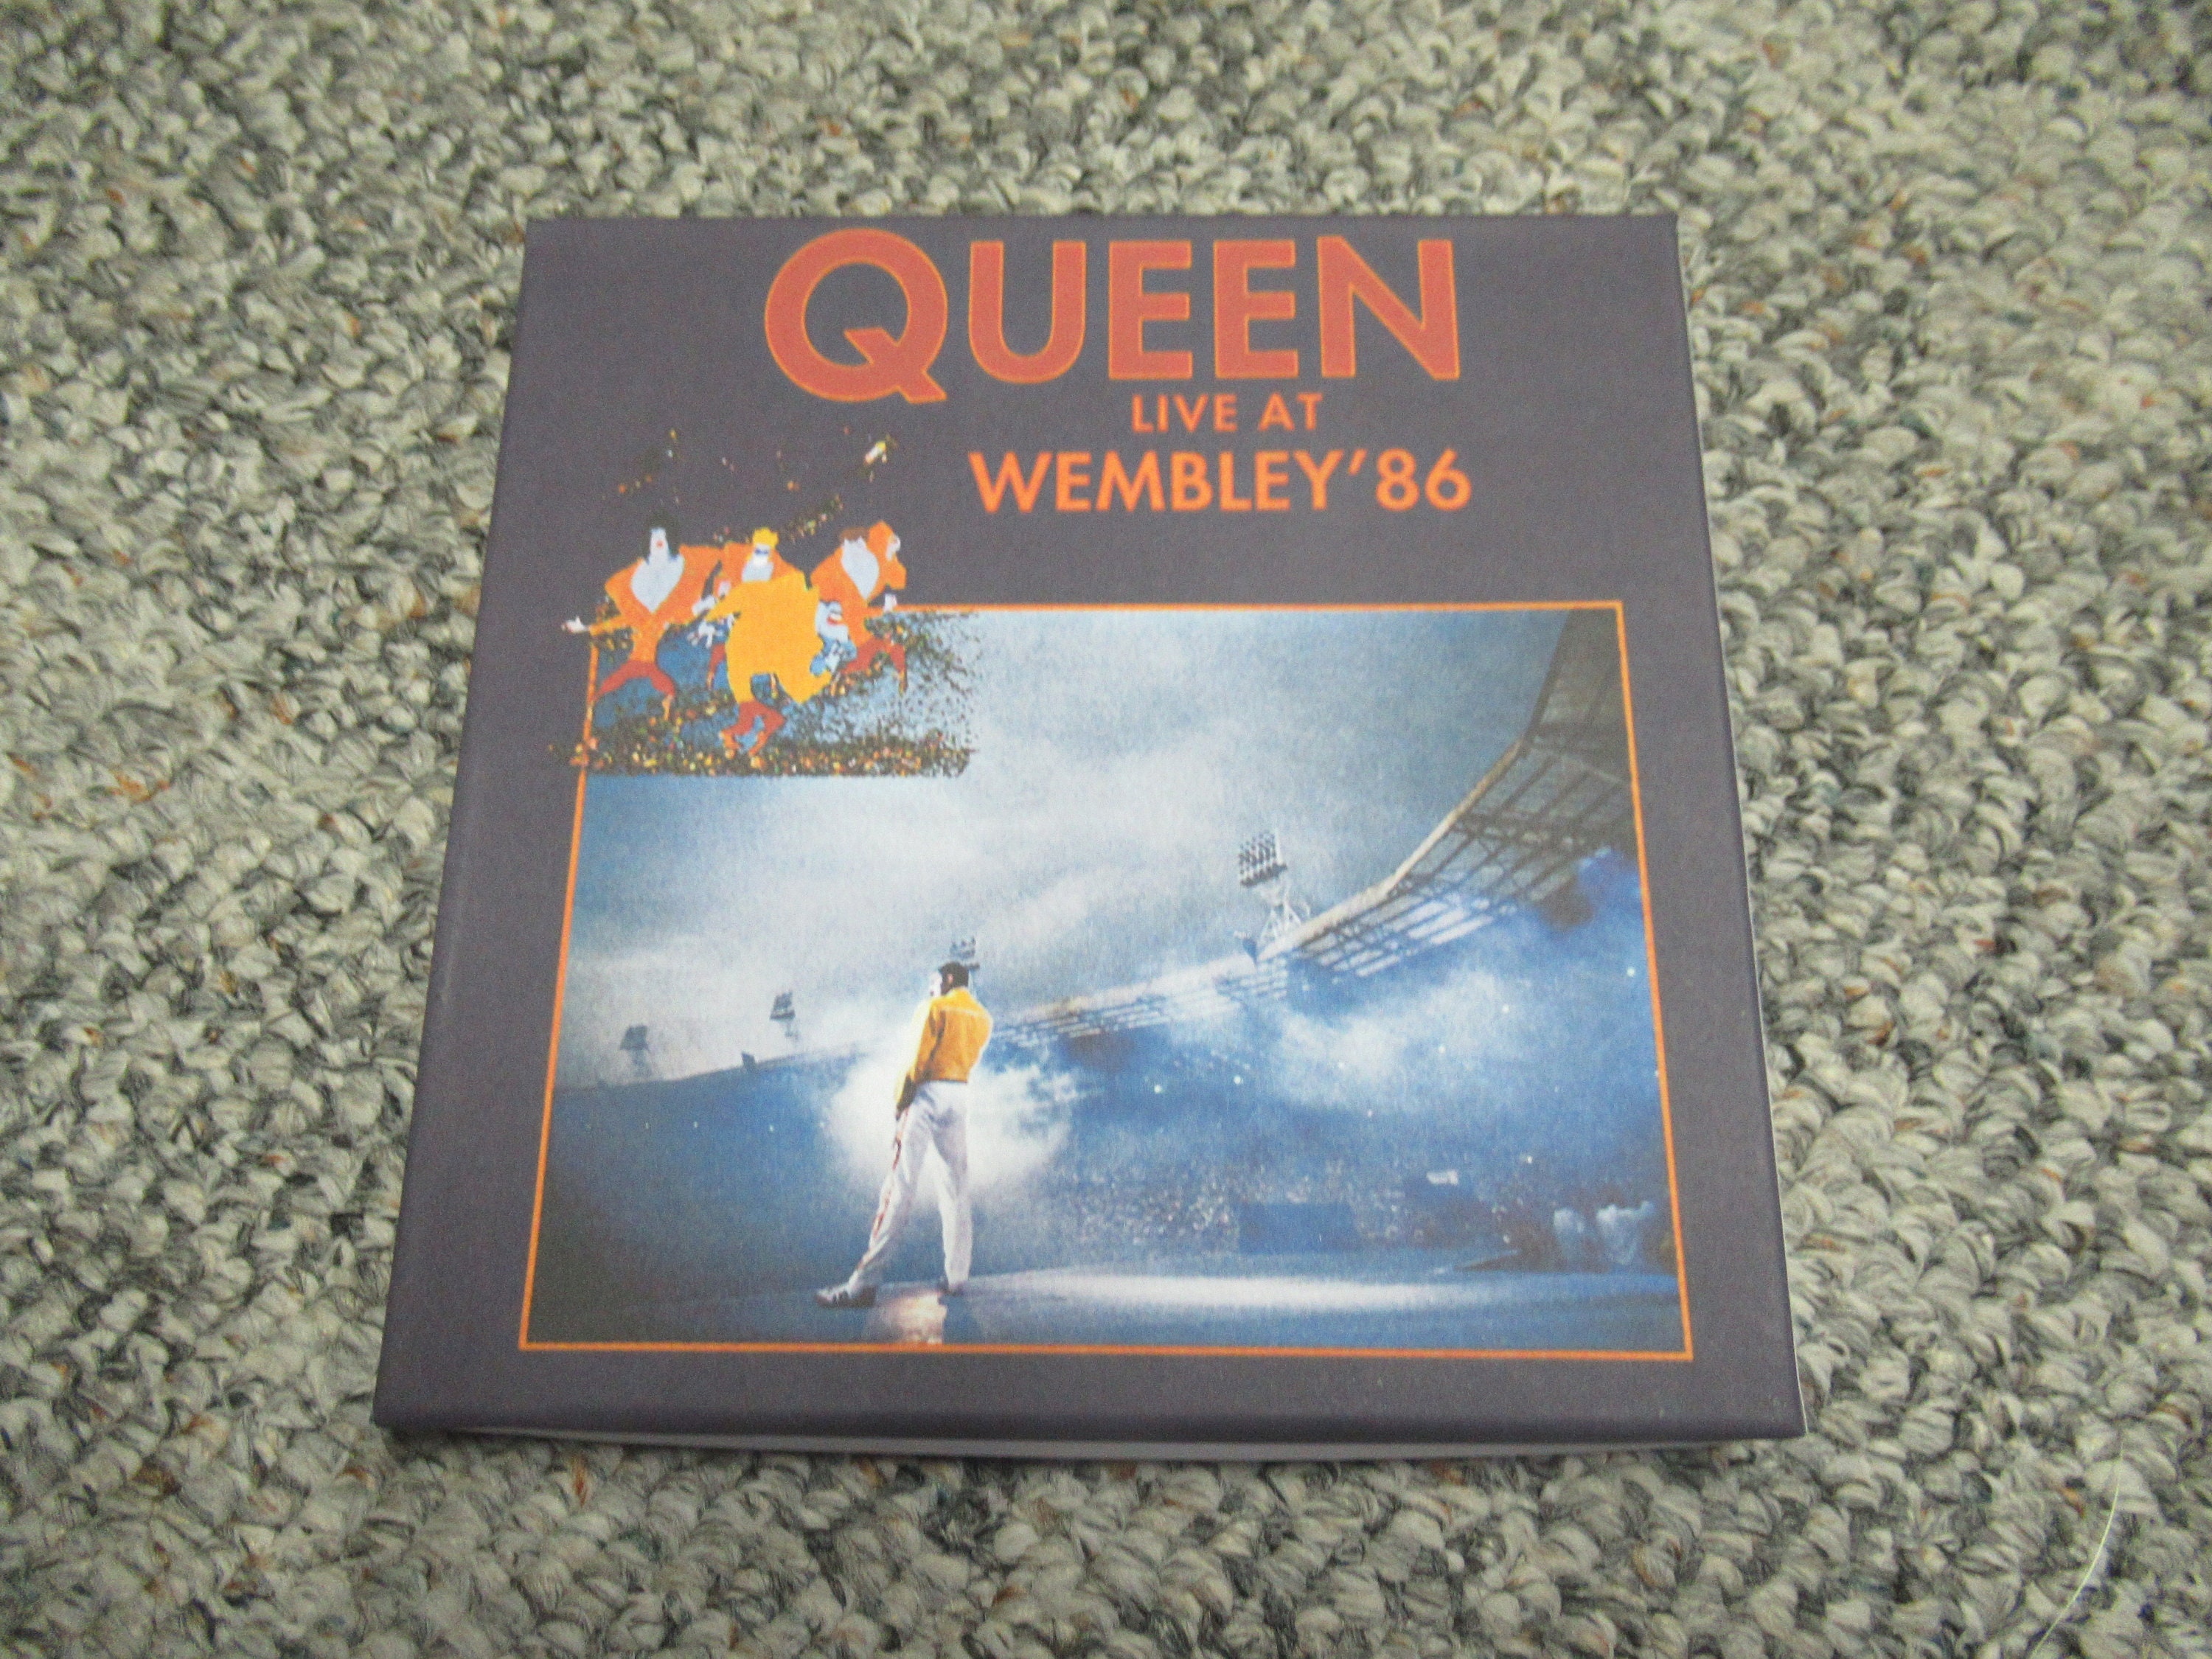 Live Wembley 86 71/2 4track Reel to Reel Tape - Etsy